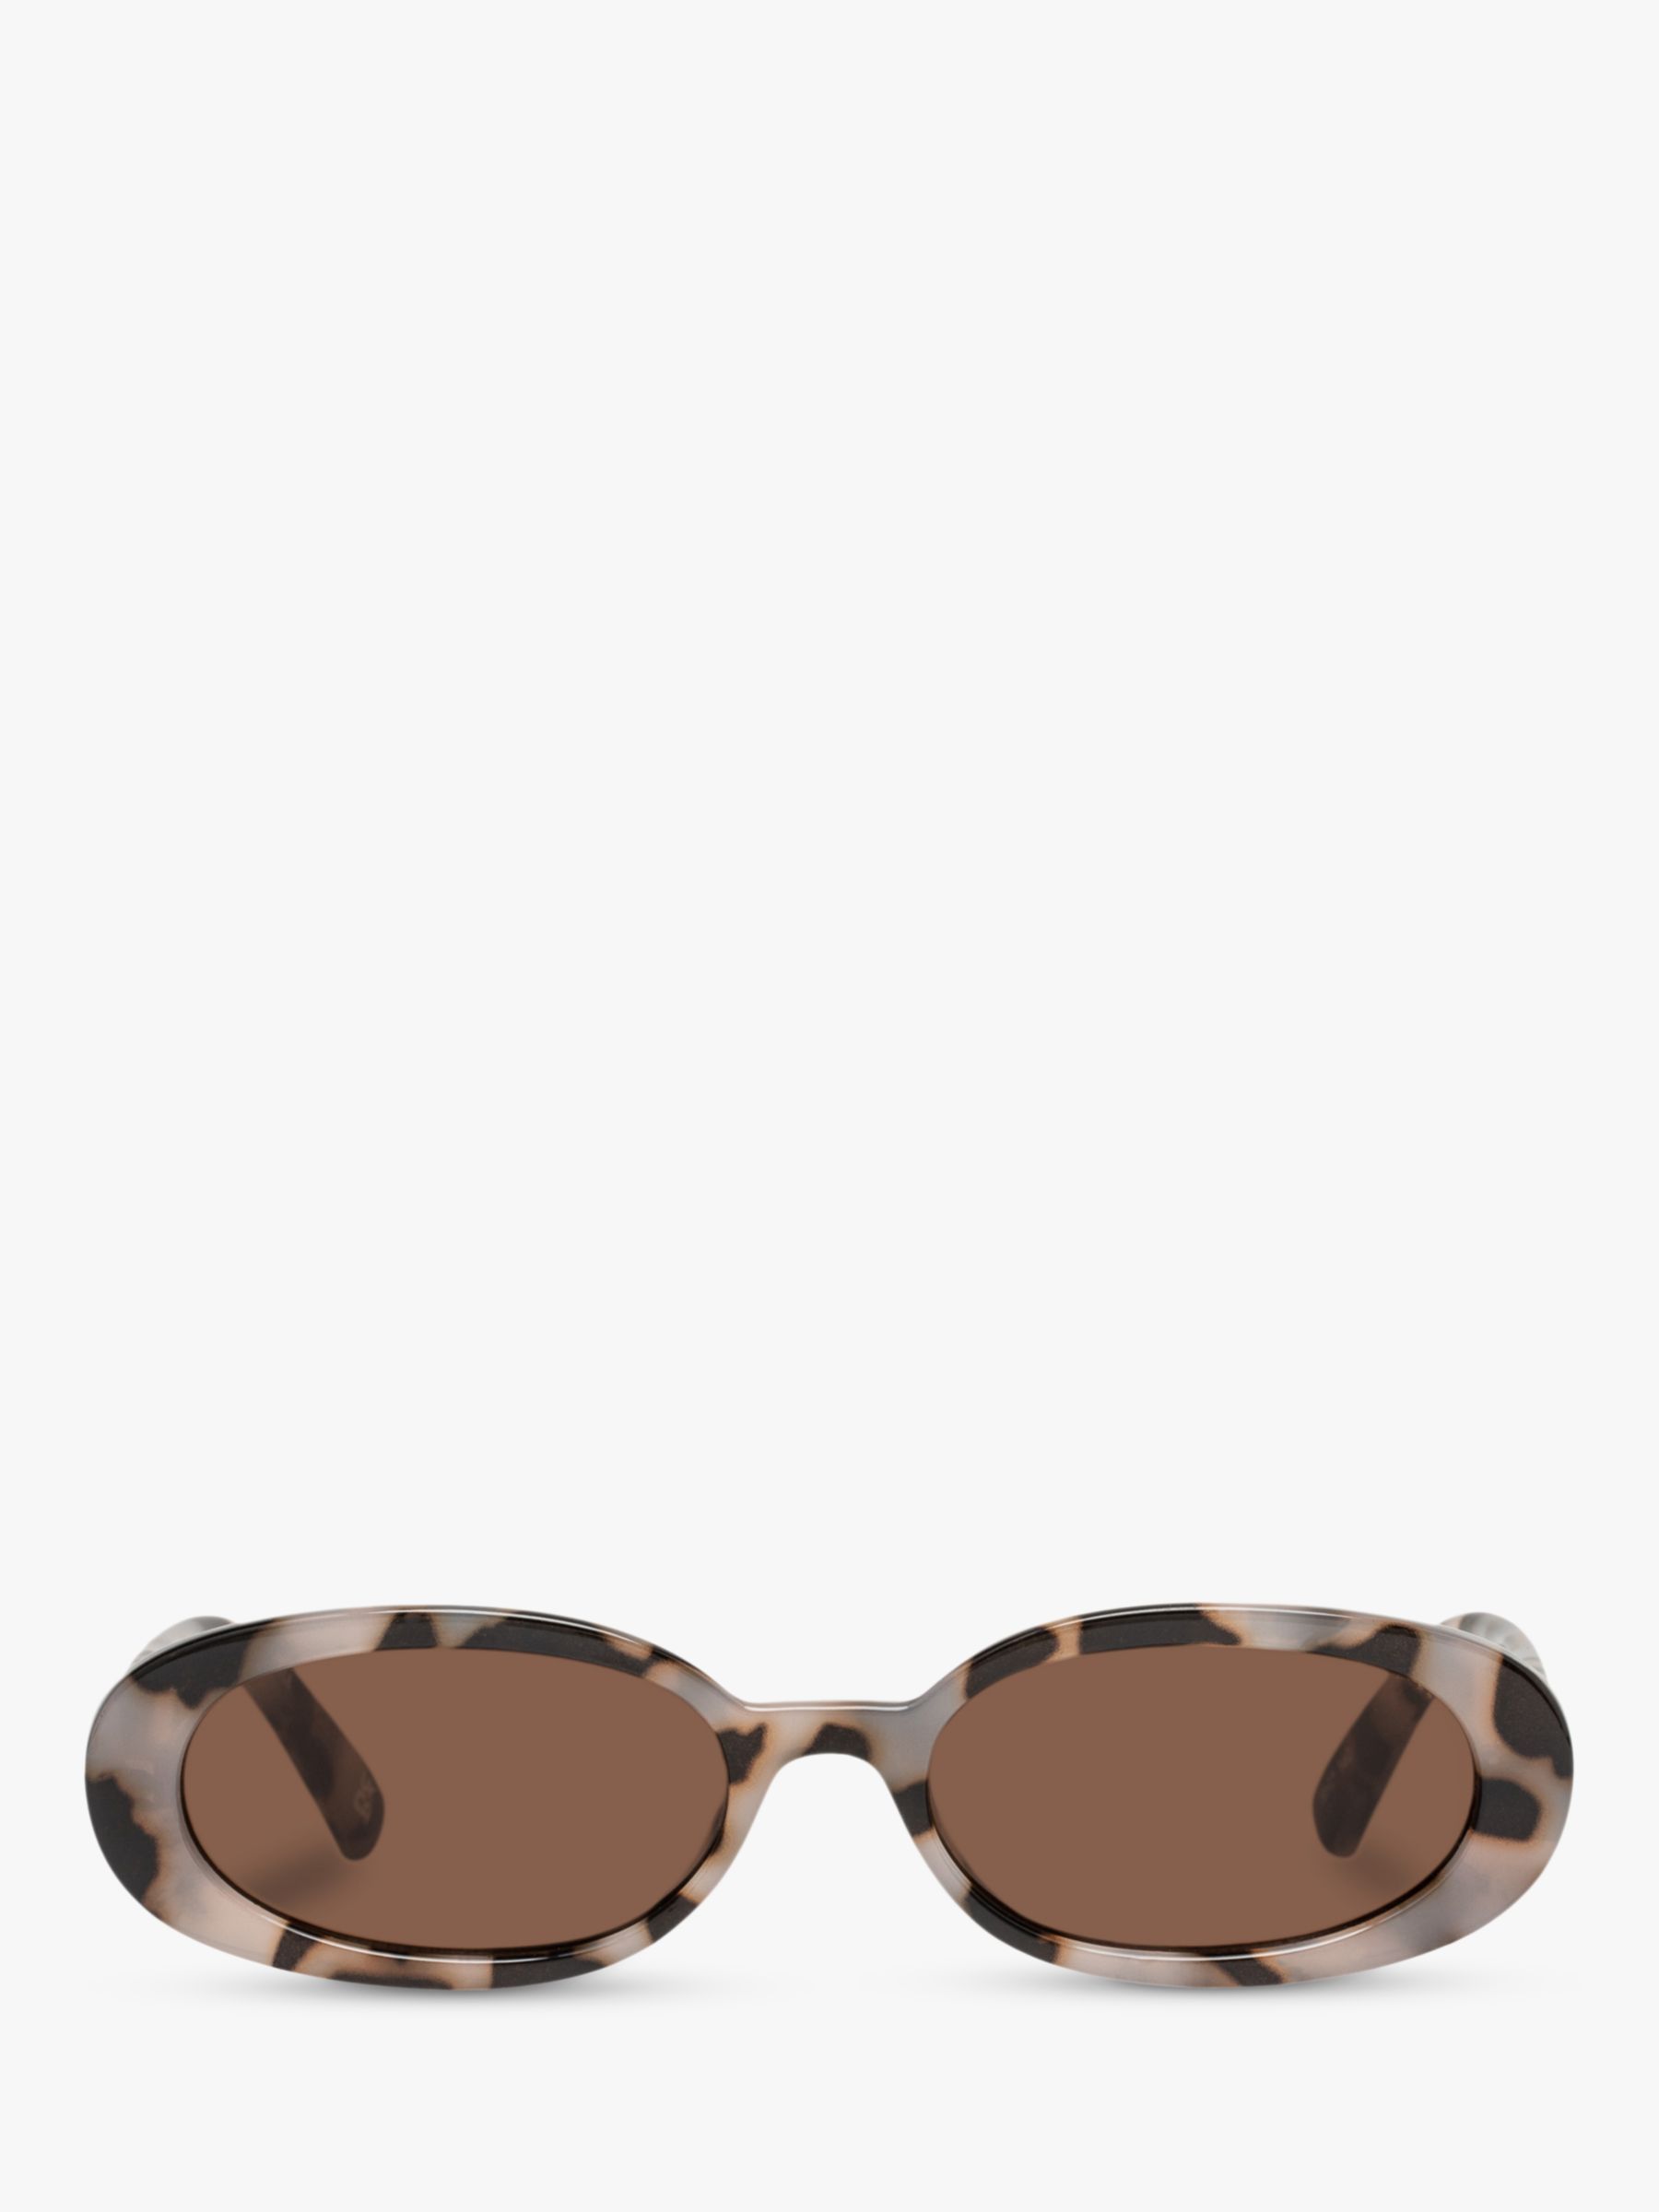 Buy Le Specs L5000176 Women's Outta Love Oval Sunglasses, Tortoise/Brown Online at johnlewis.com